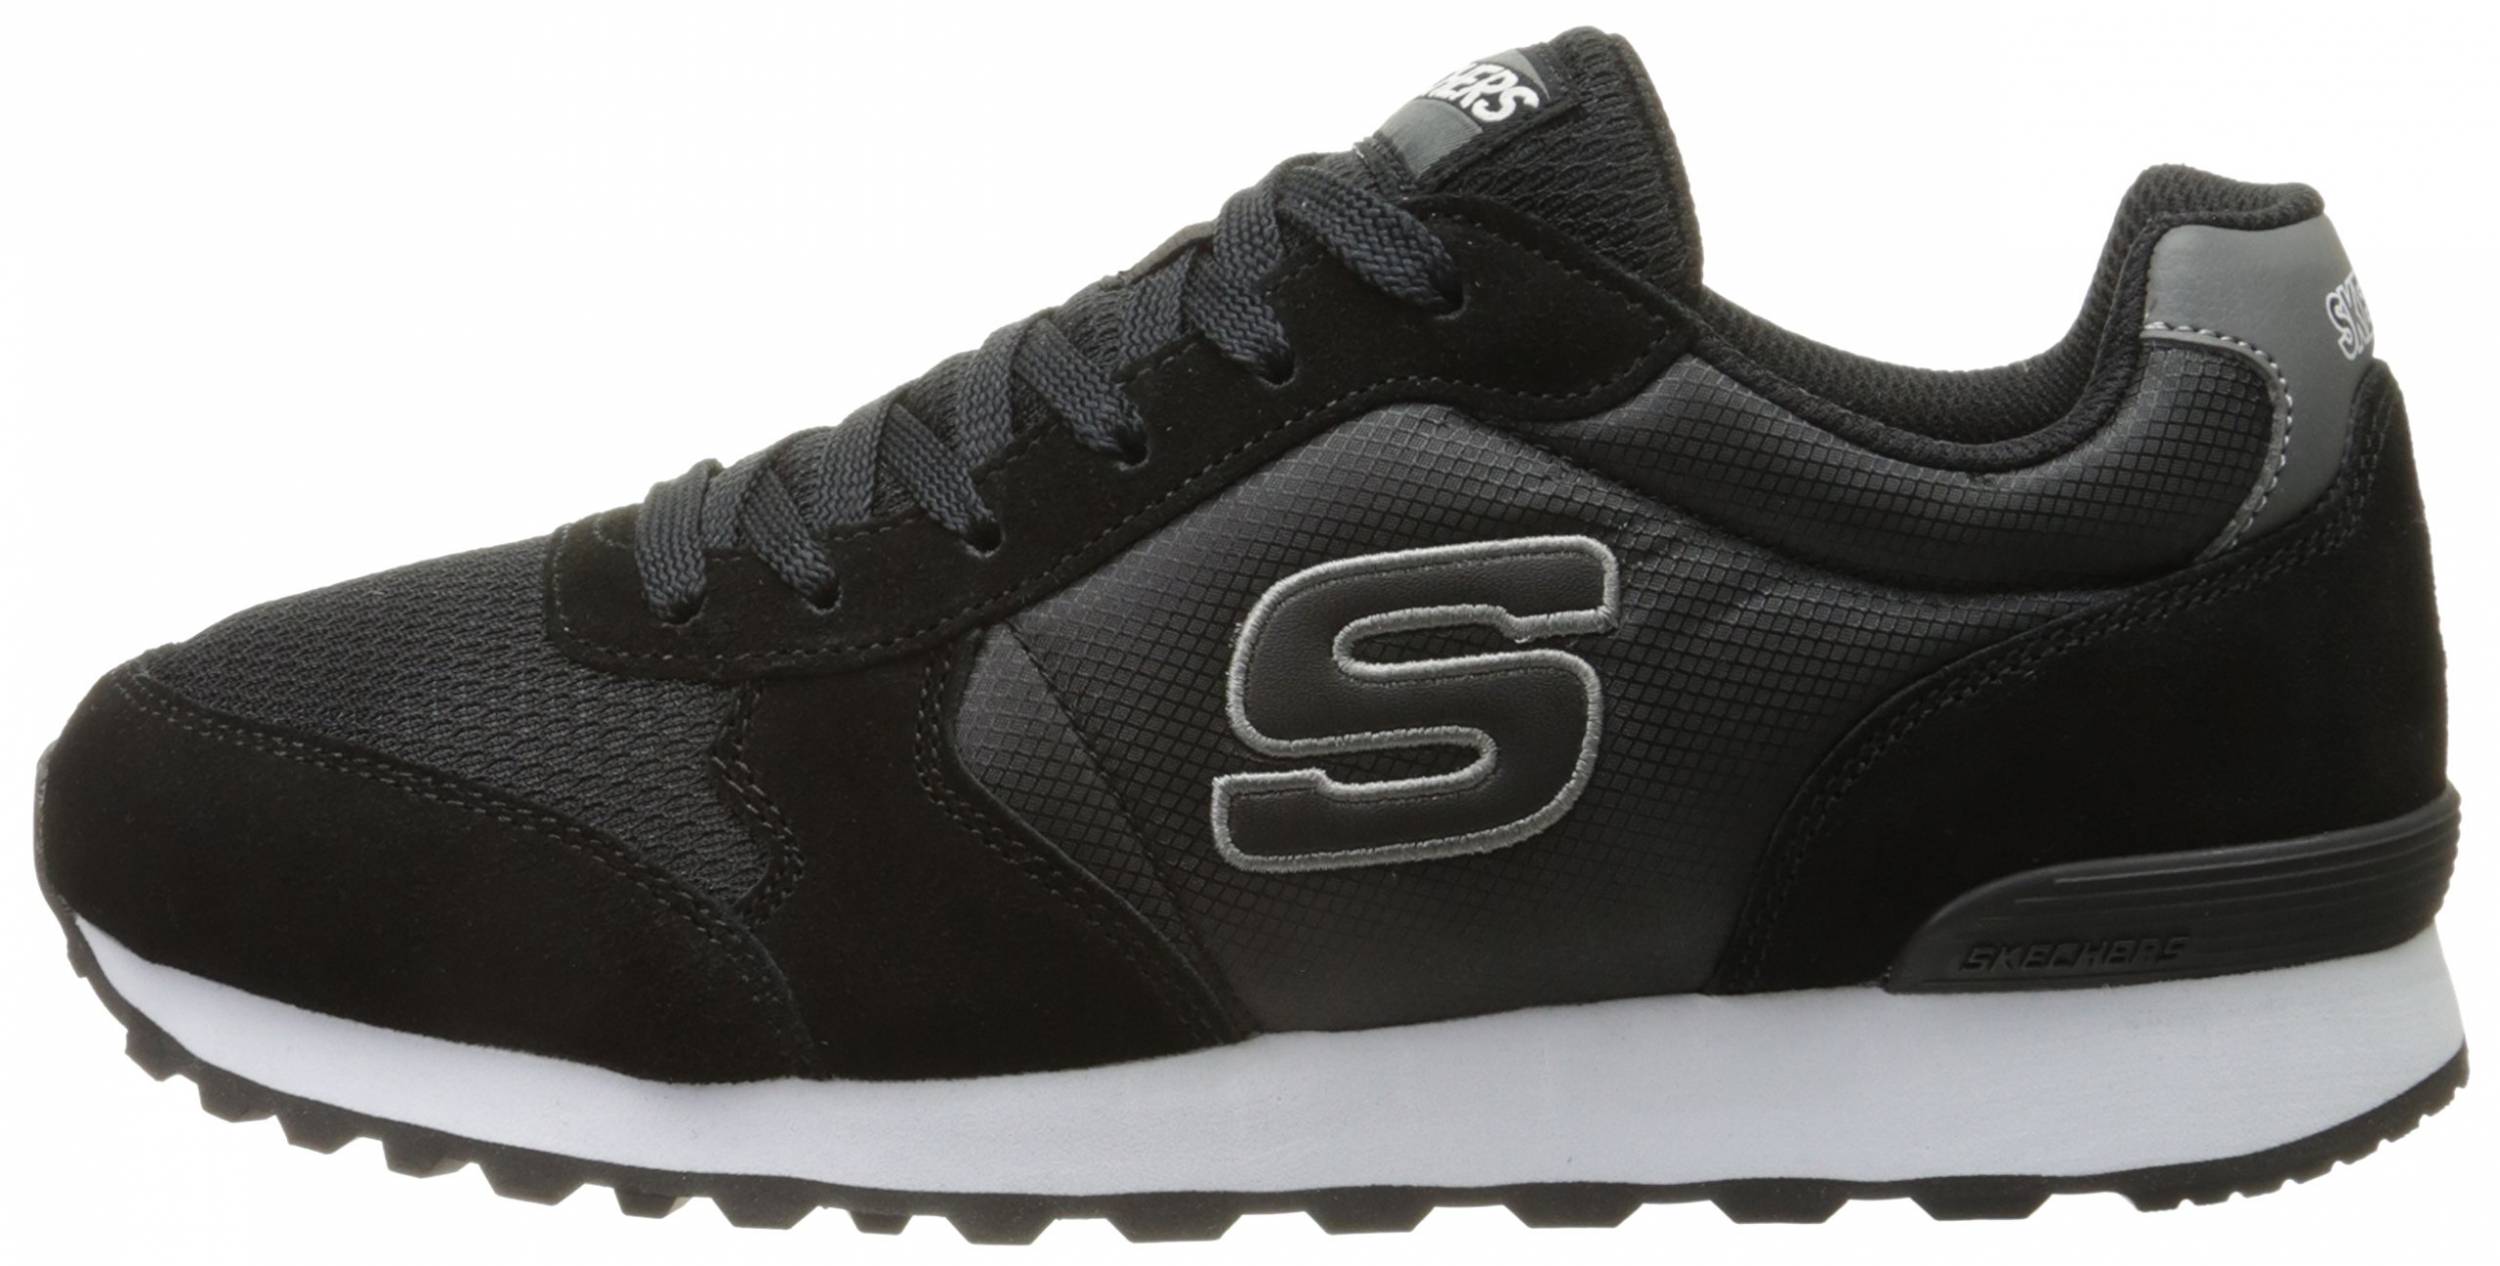 Skechers OG 85 sneakers (only $32) | RunRepeat